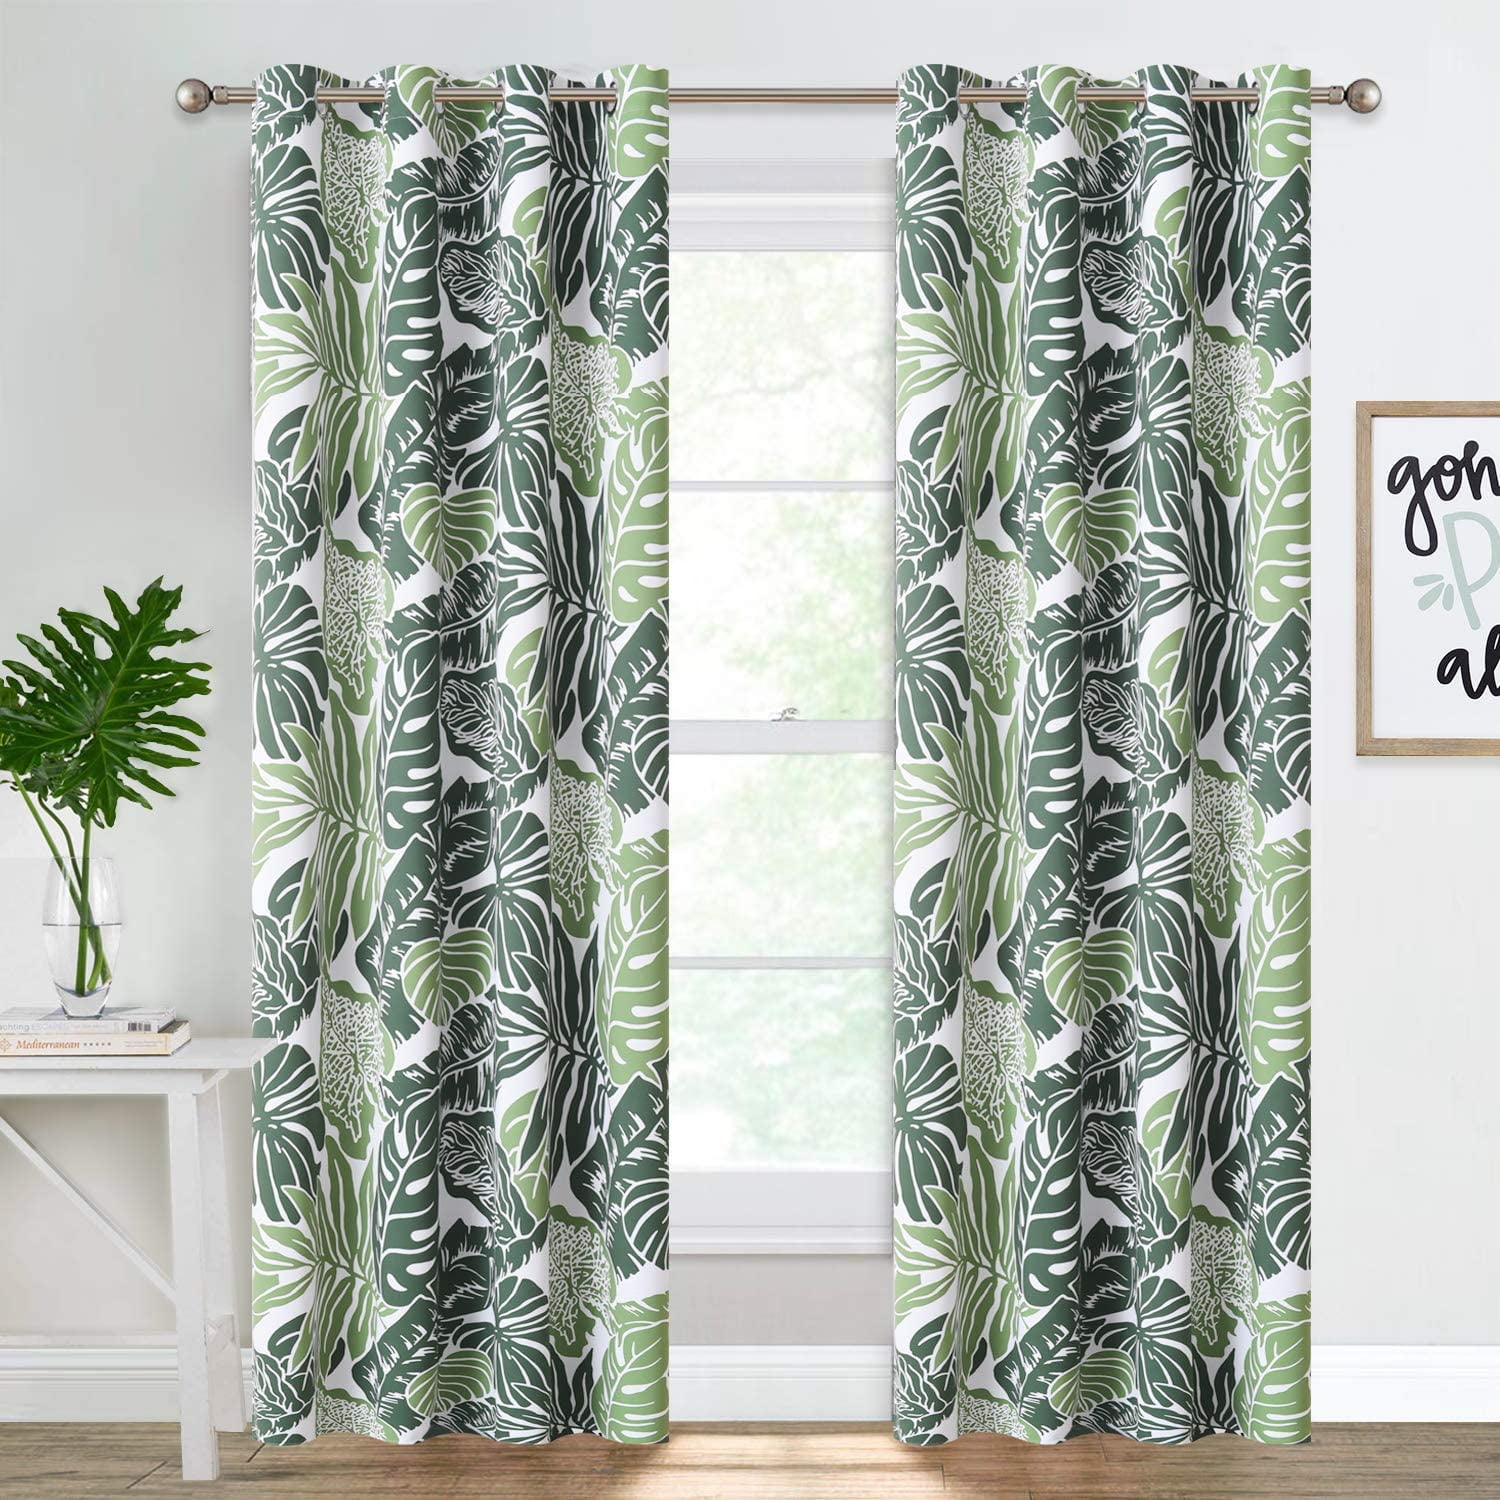 Room Darkening Tropical Curtains 84, Banana Leaf Curtains Uk